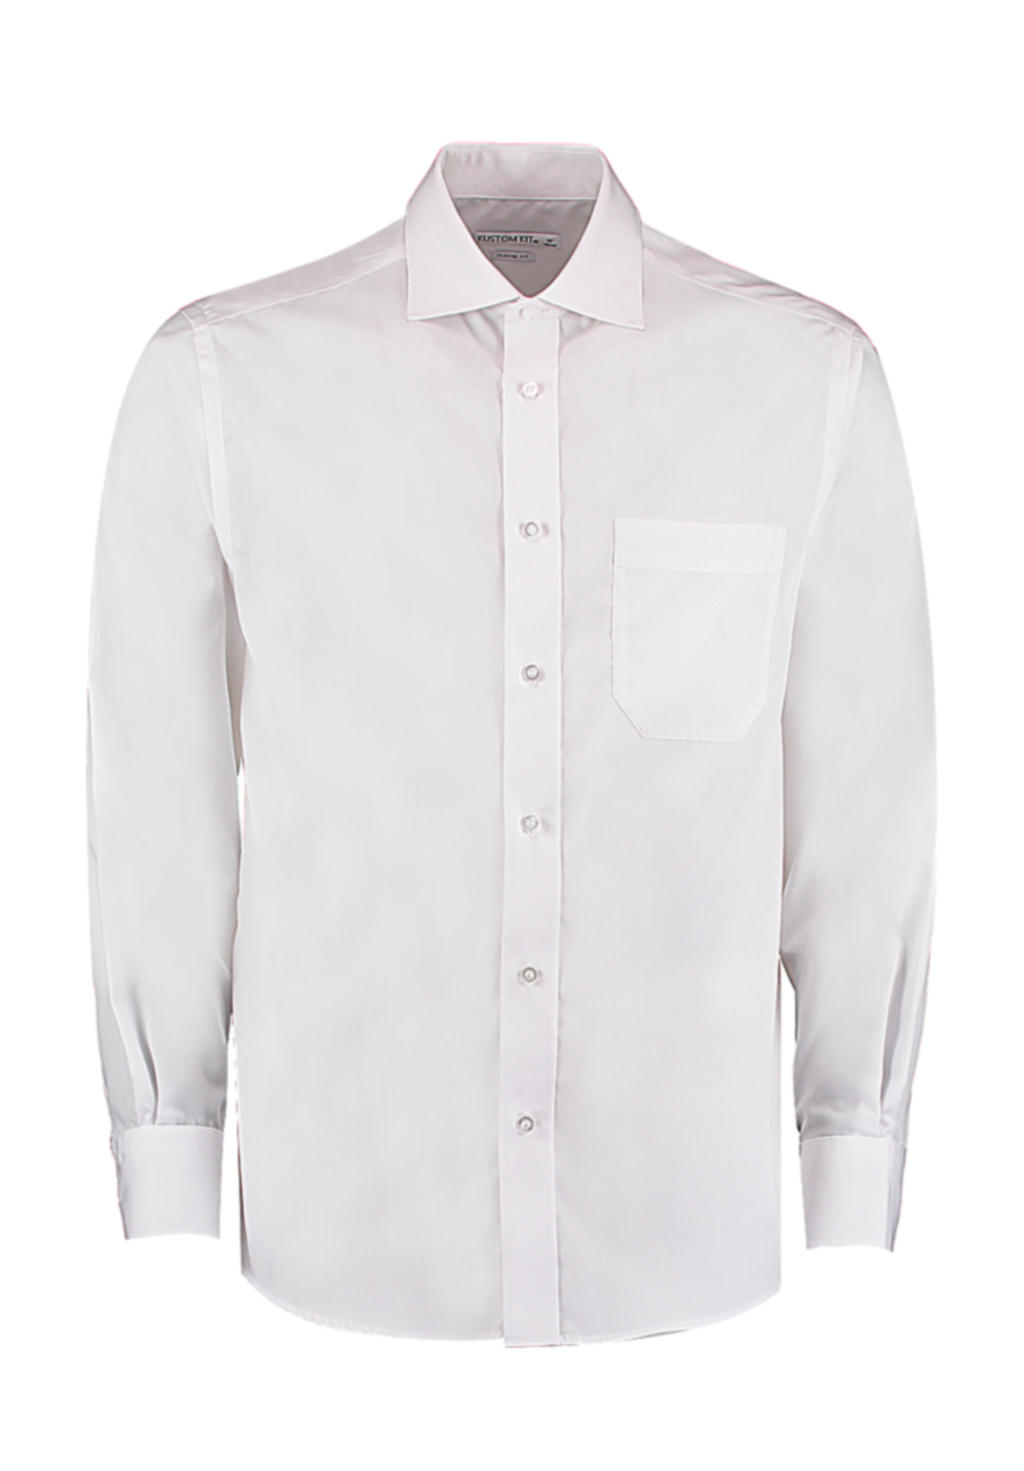  Classic Fit Non Iron Shirt in Farbe White